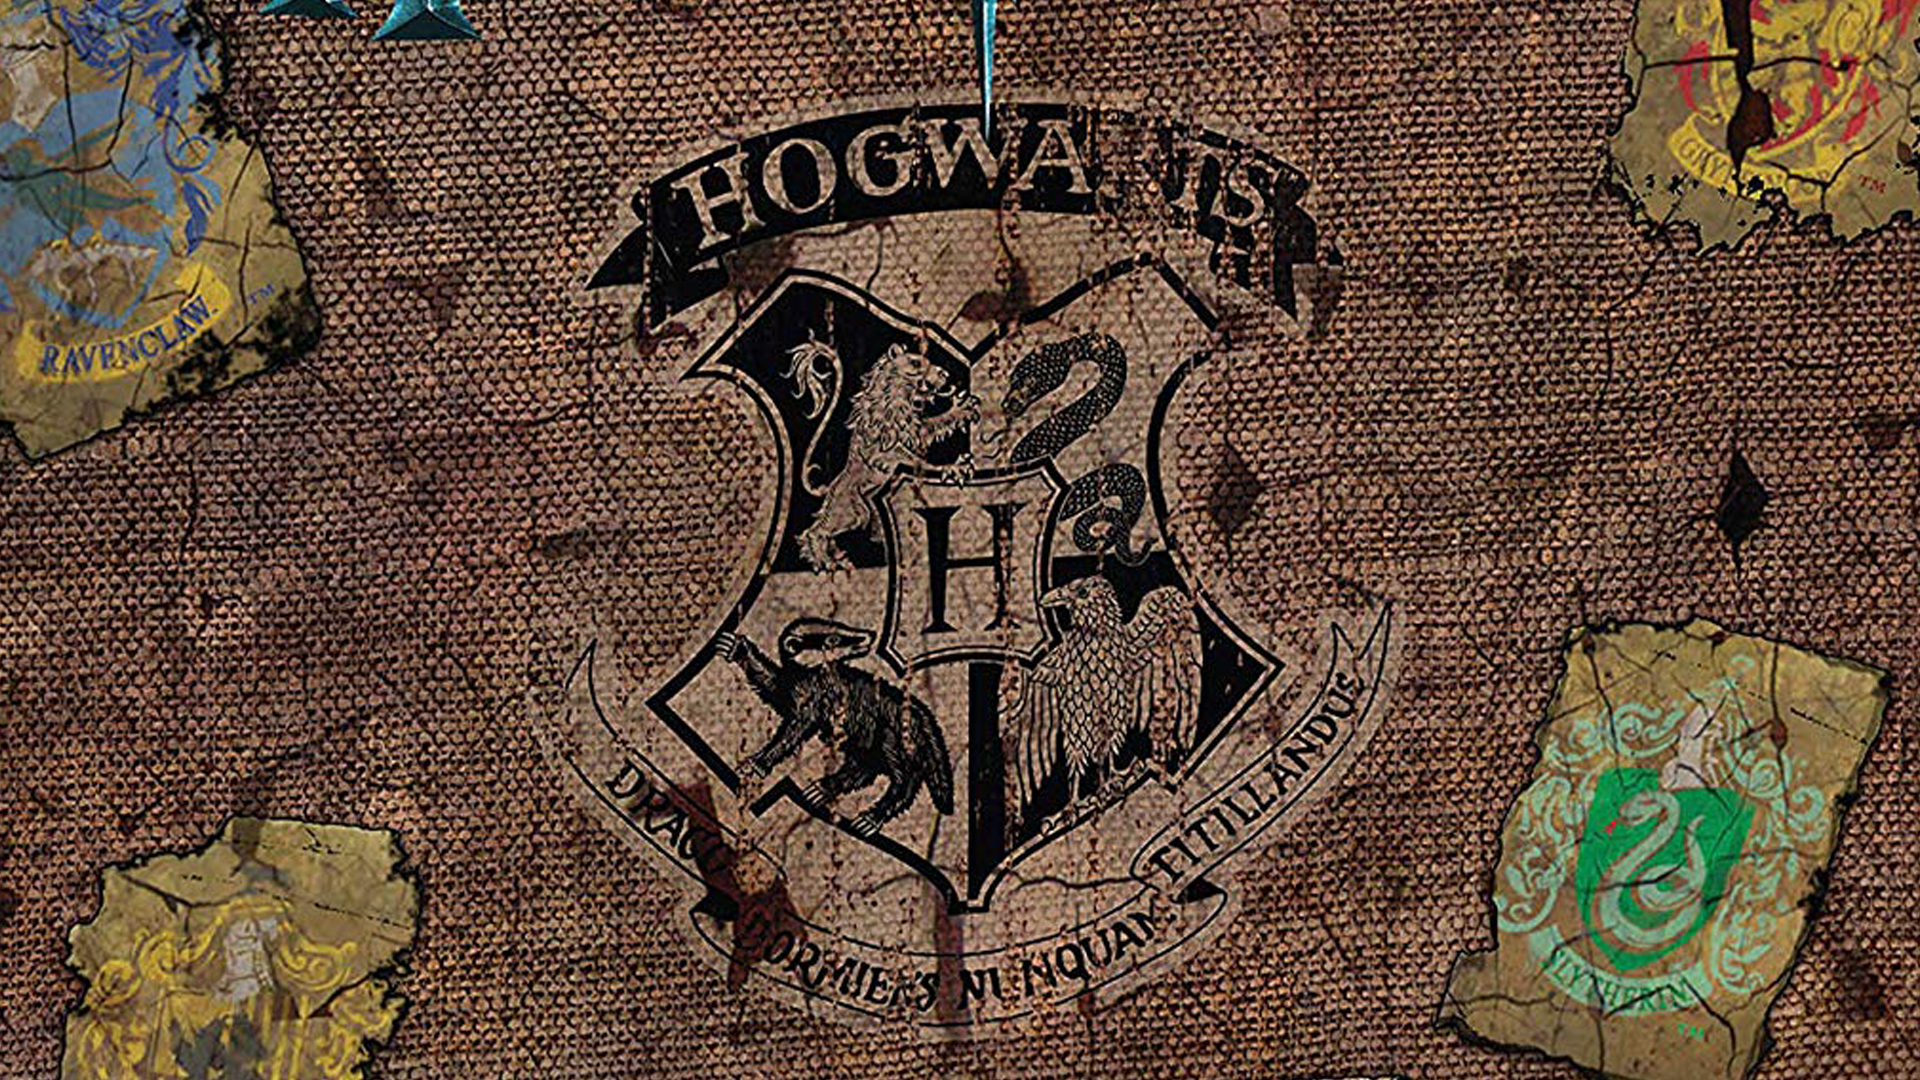 harry potter hogwarts battle legacy